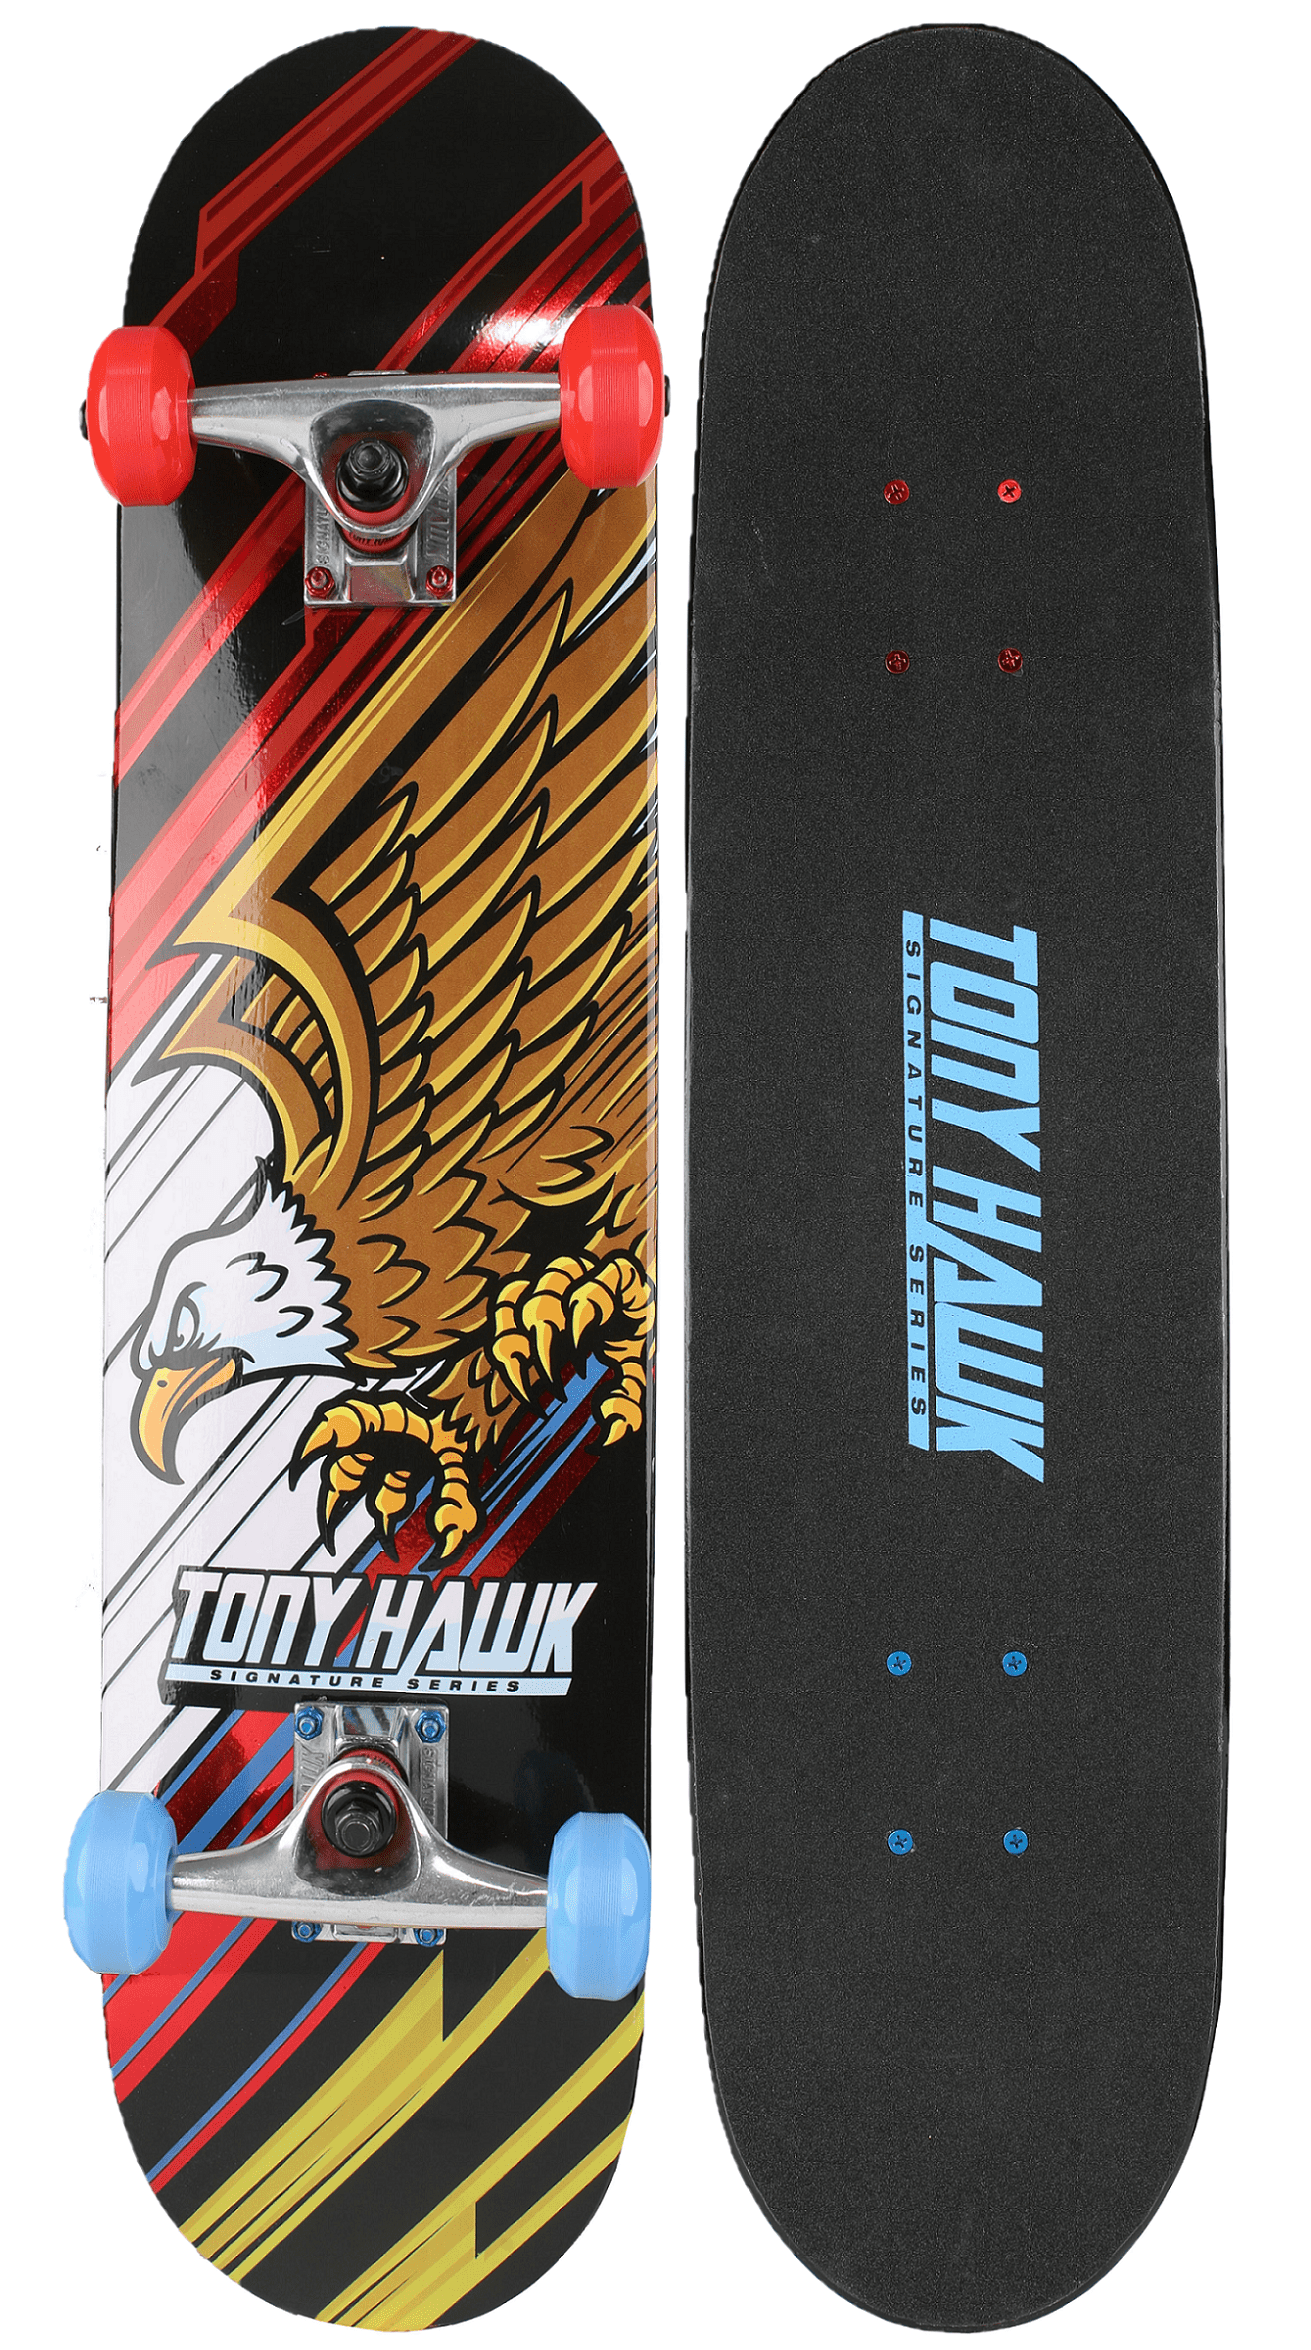 Tony Hawk 31" x 7.75" Popsicle Dive Hawk Skateboard with Pro ALU Trucks- Multicolor, Ages 5+, Full Black Grip Tape, Glossy Wood Finish, Wheel Diameter 50mm x 30mm Colored ABEC-3 Bearings -